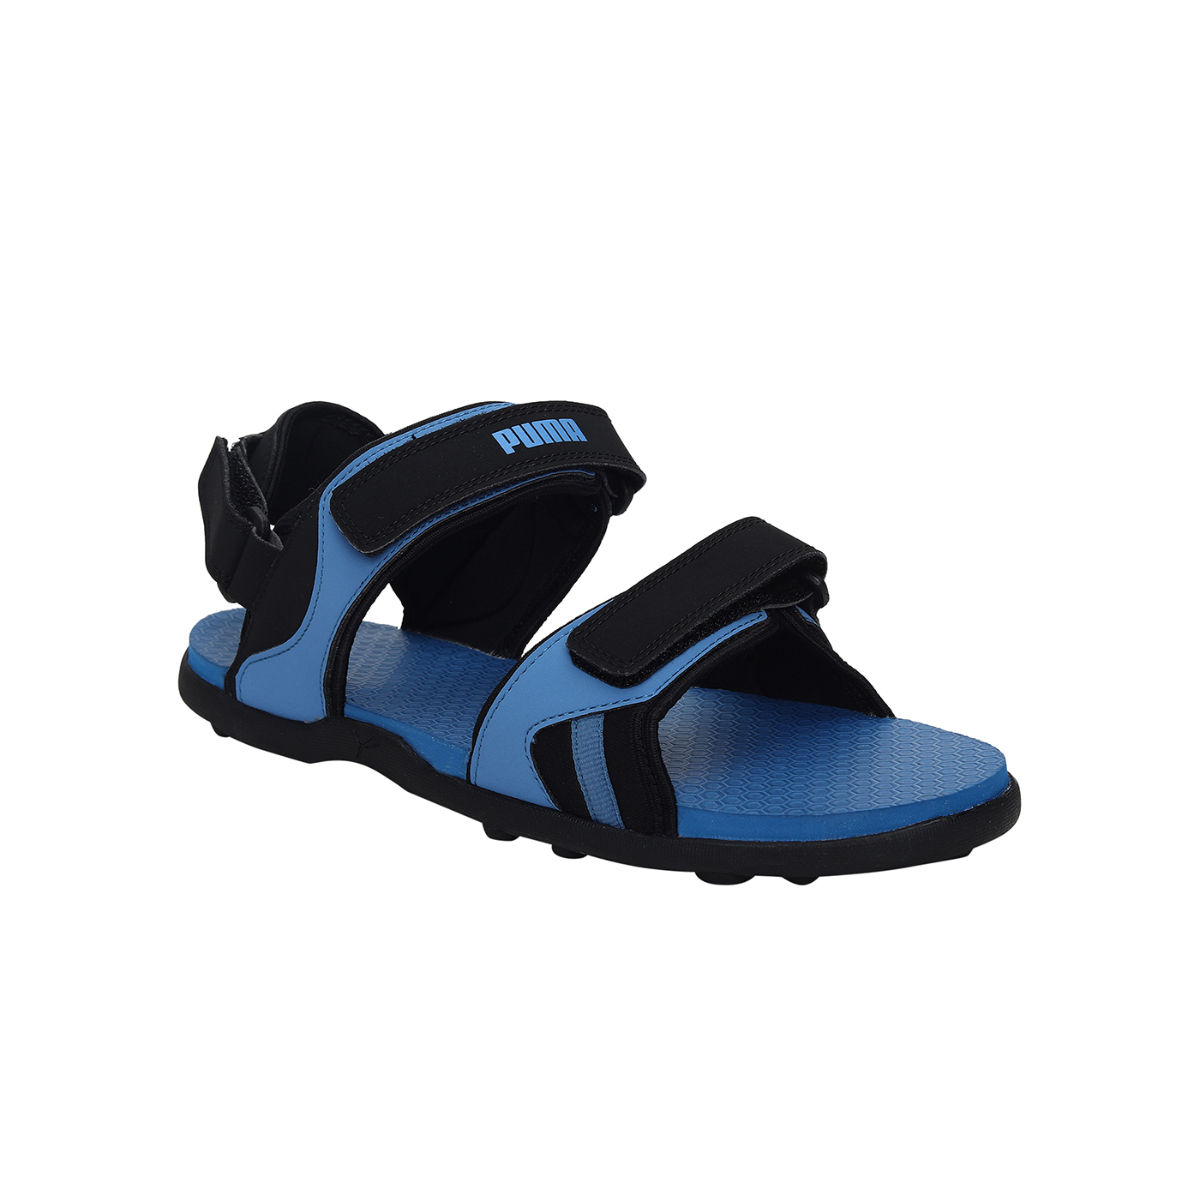 puma sandals Off 55% - www.icnnational.com